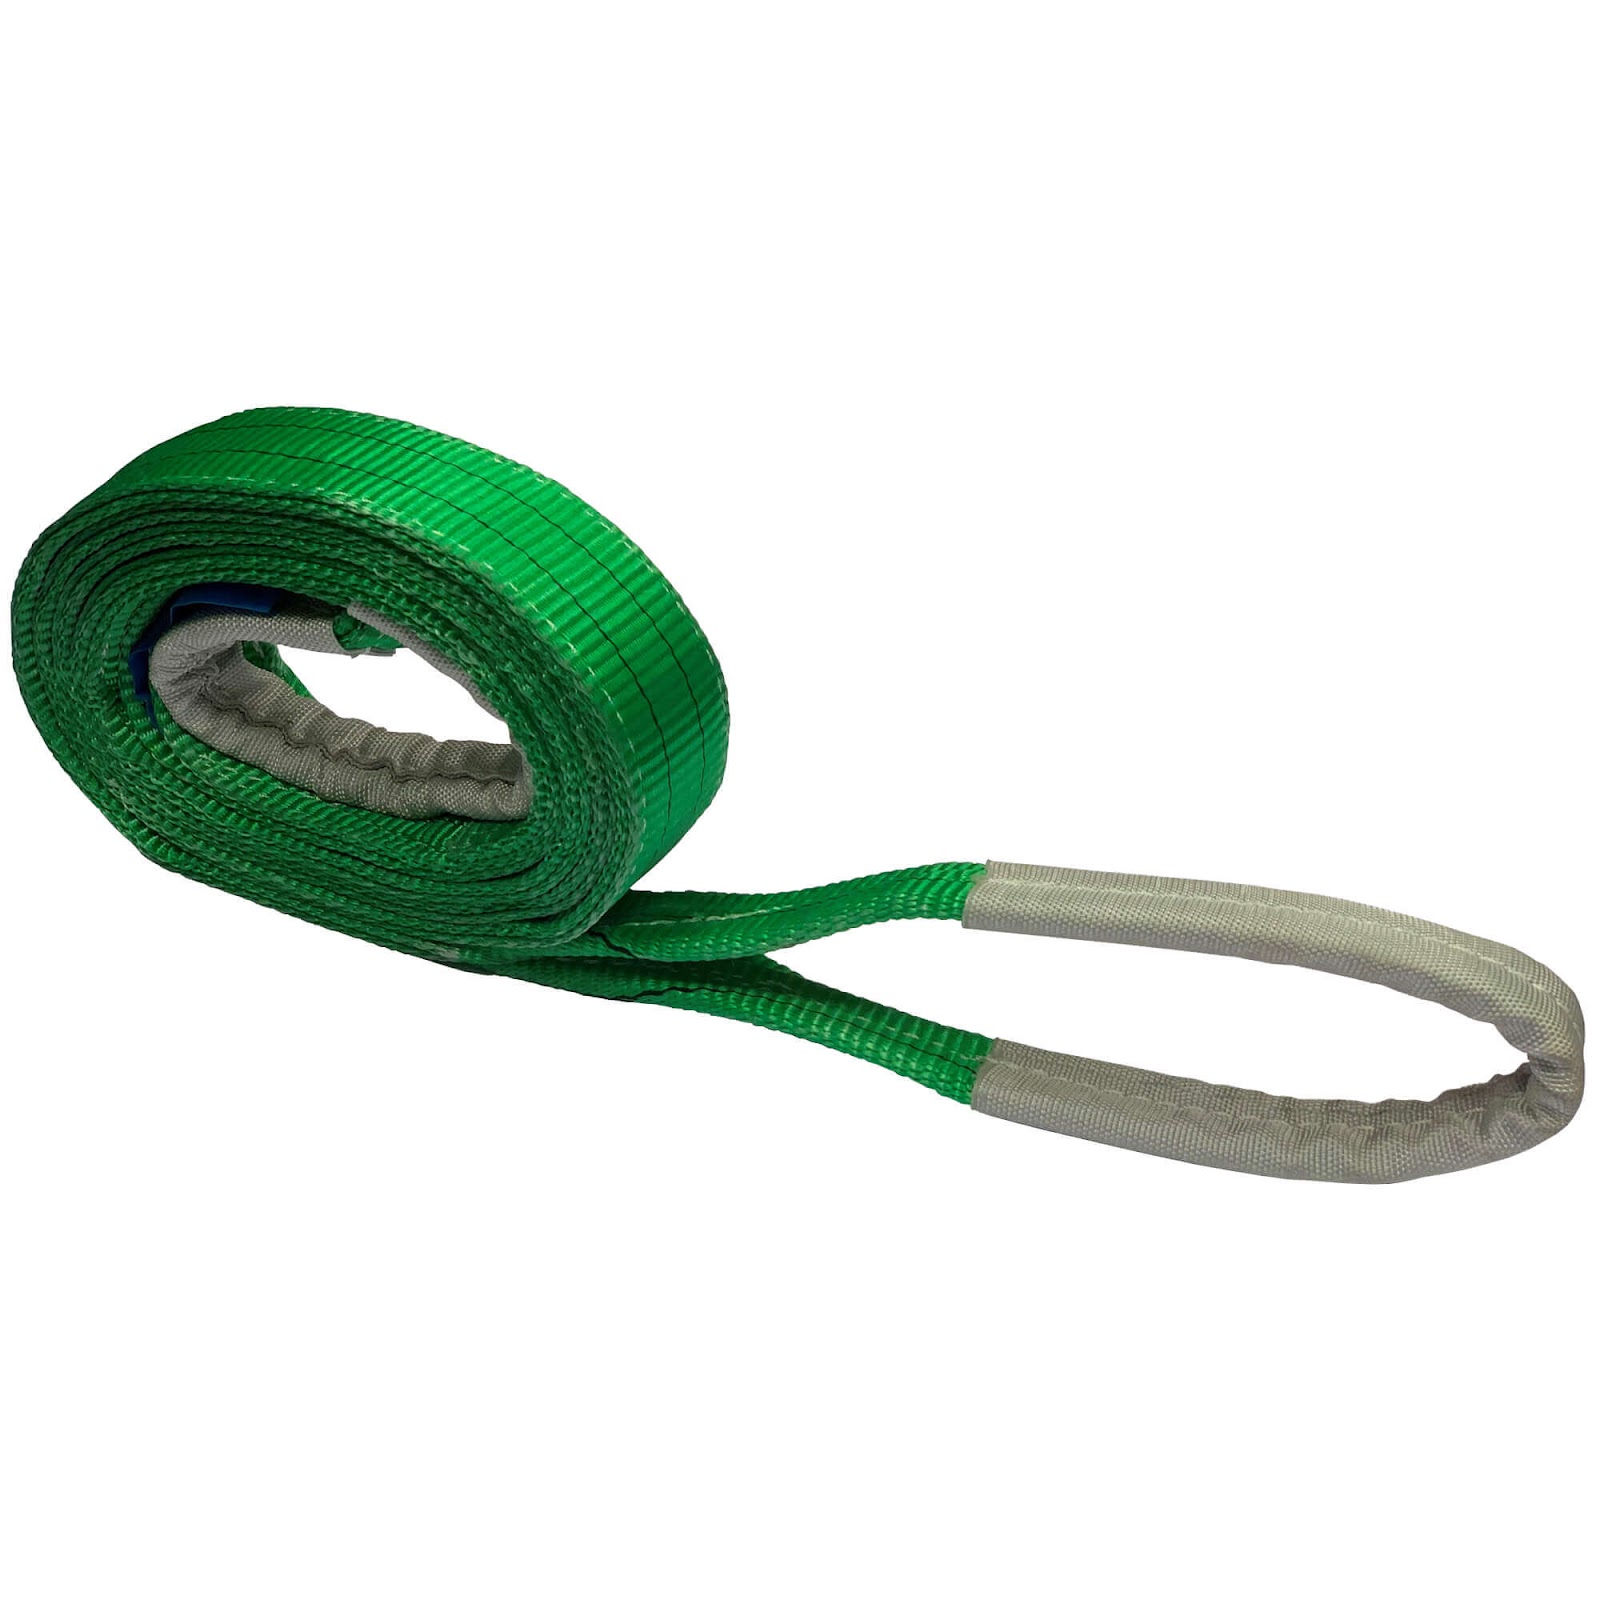  Webbing Sling Safety Factor 6-1 - Lifting Slings  2 Inch Green color single ply webbing sling flat belt